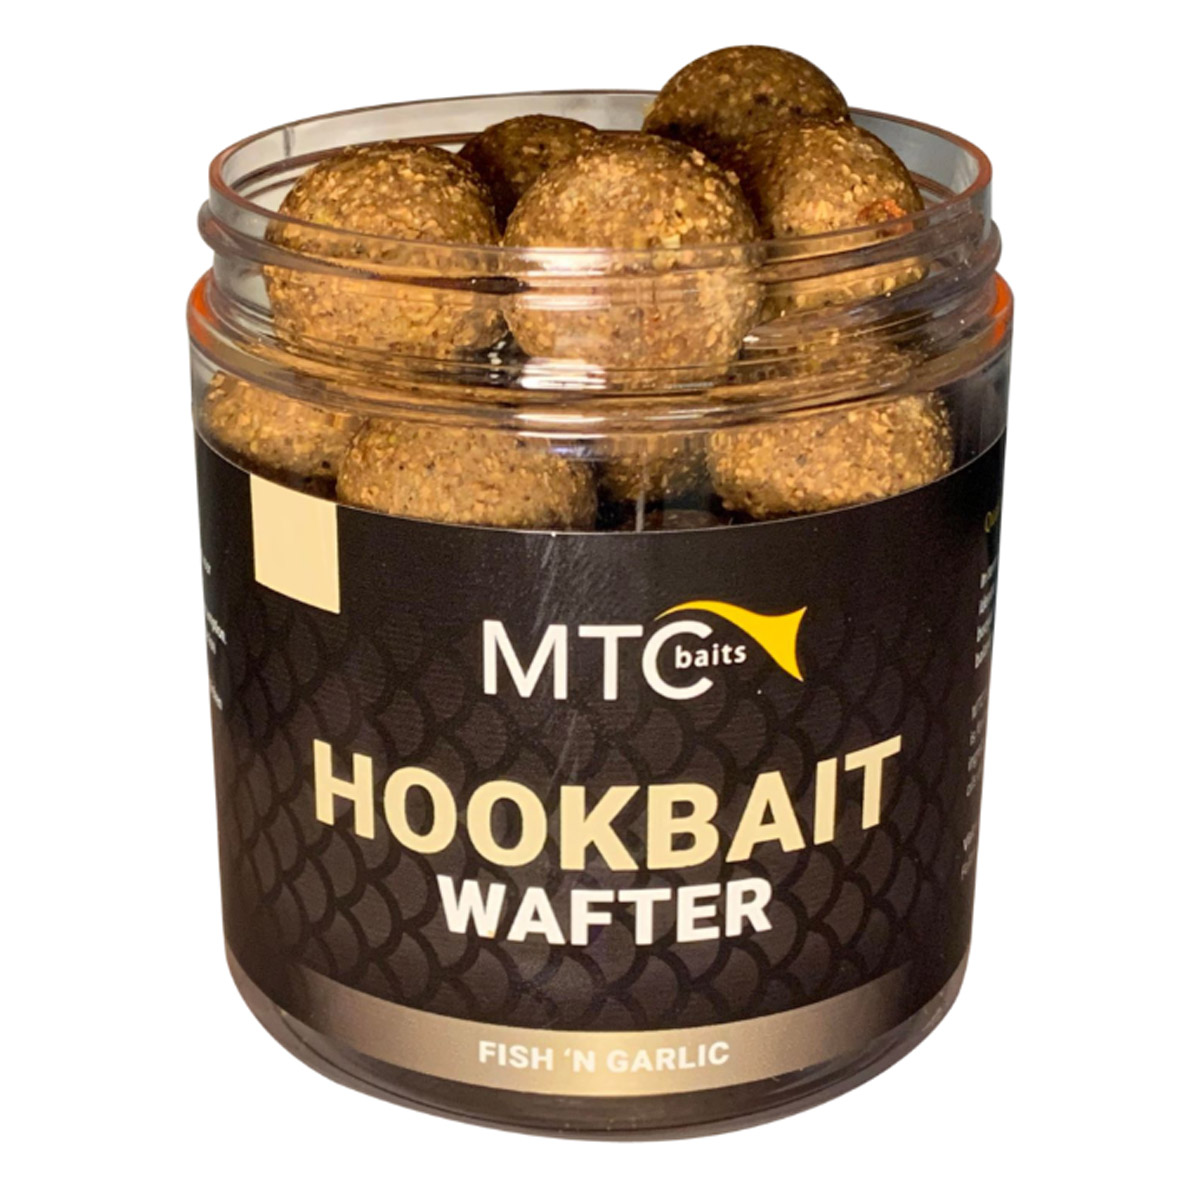 MTC Baits Hookbait Wafter Fish 'n Garlic 20 MM